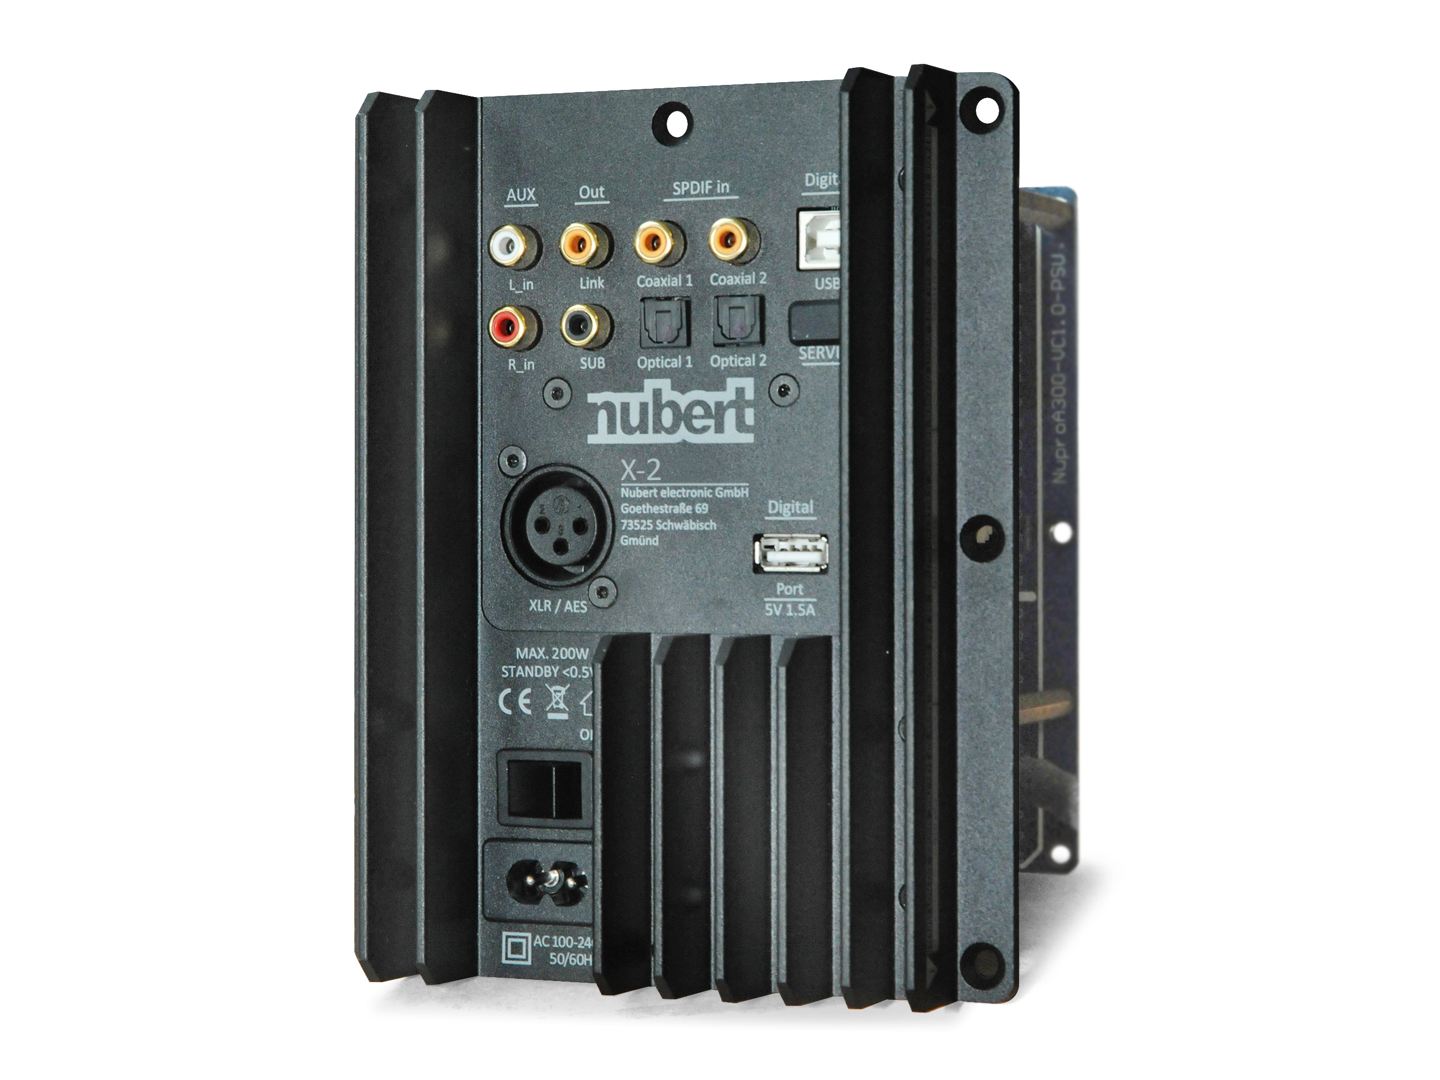 Nubert nuPro X-3000 amp unit